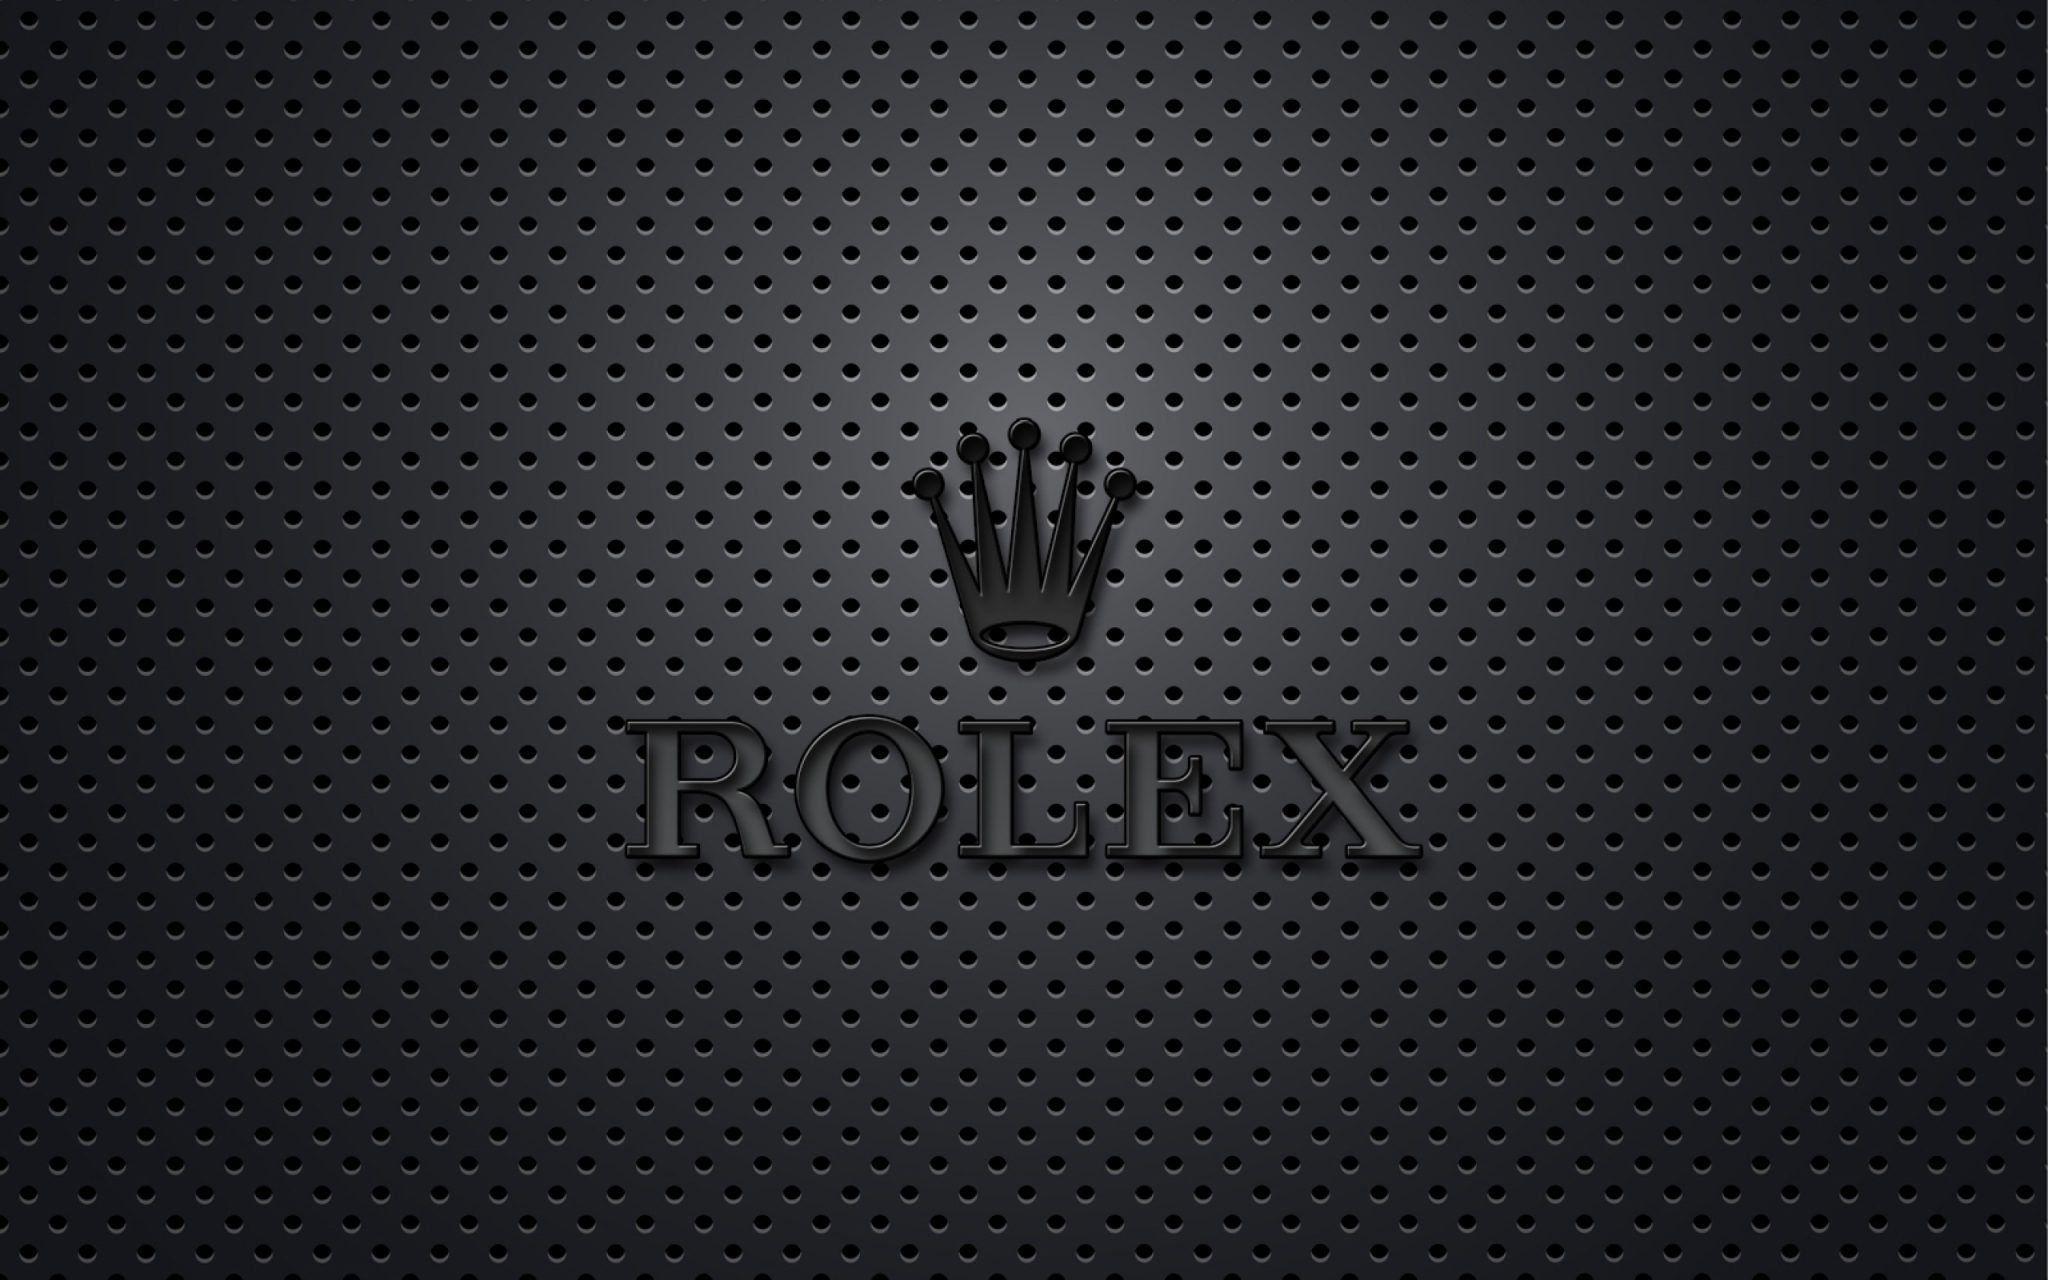 rolex crown wallpaper HD for desktop wallpaper background